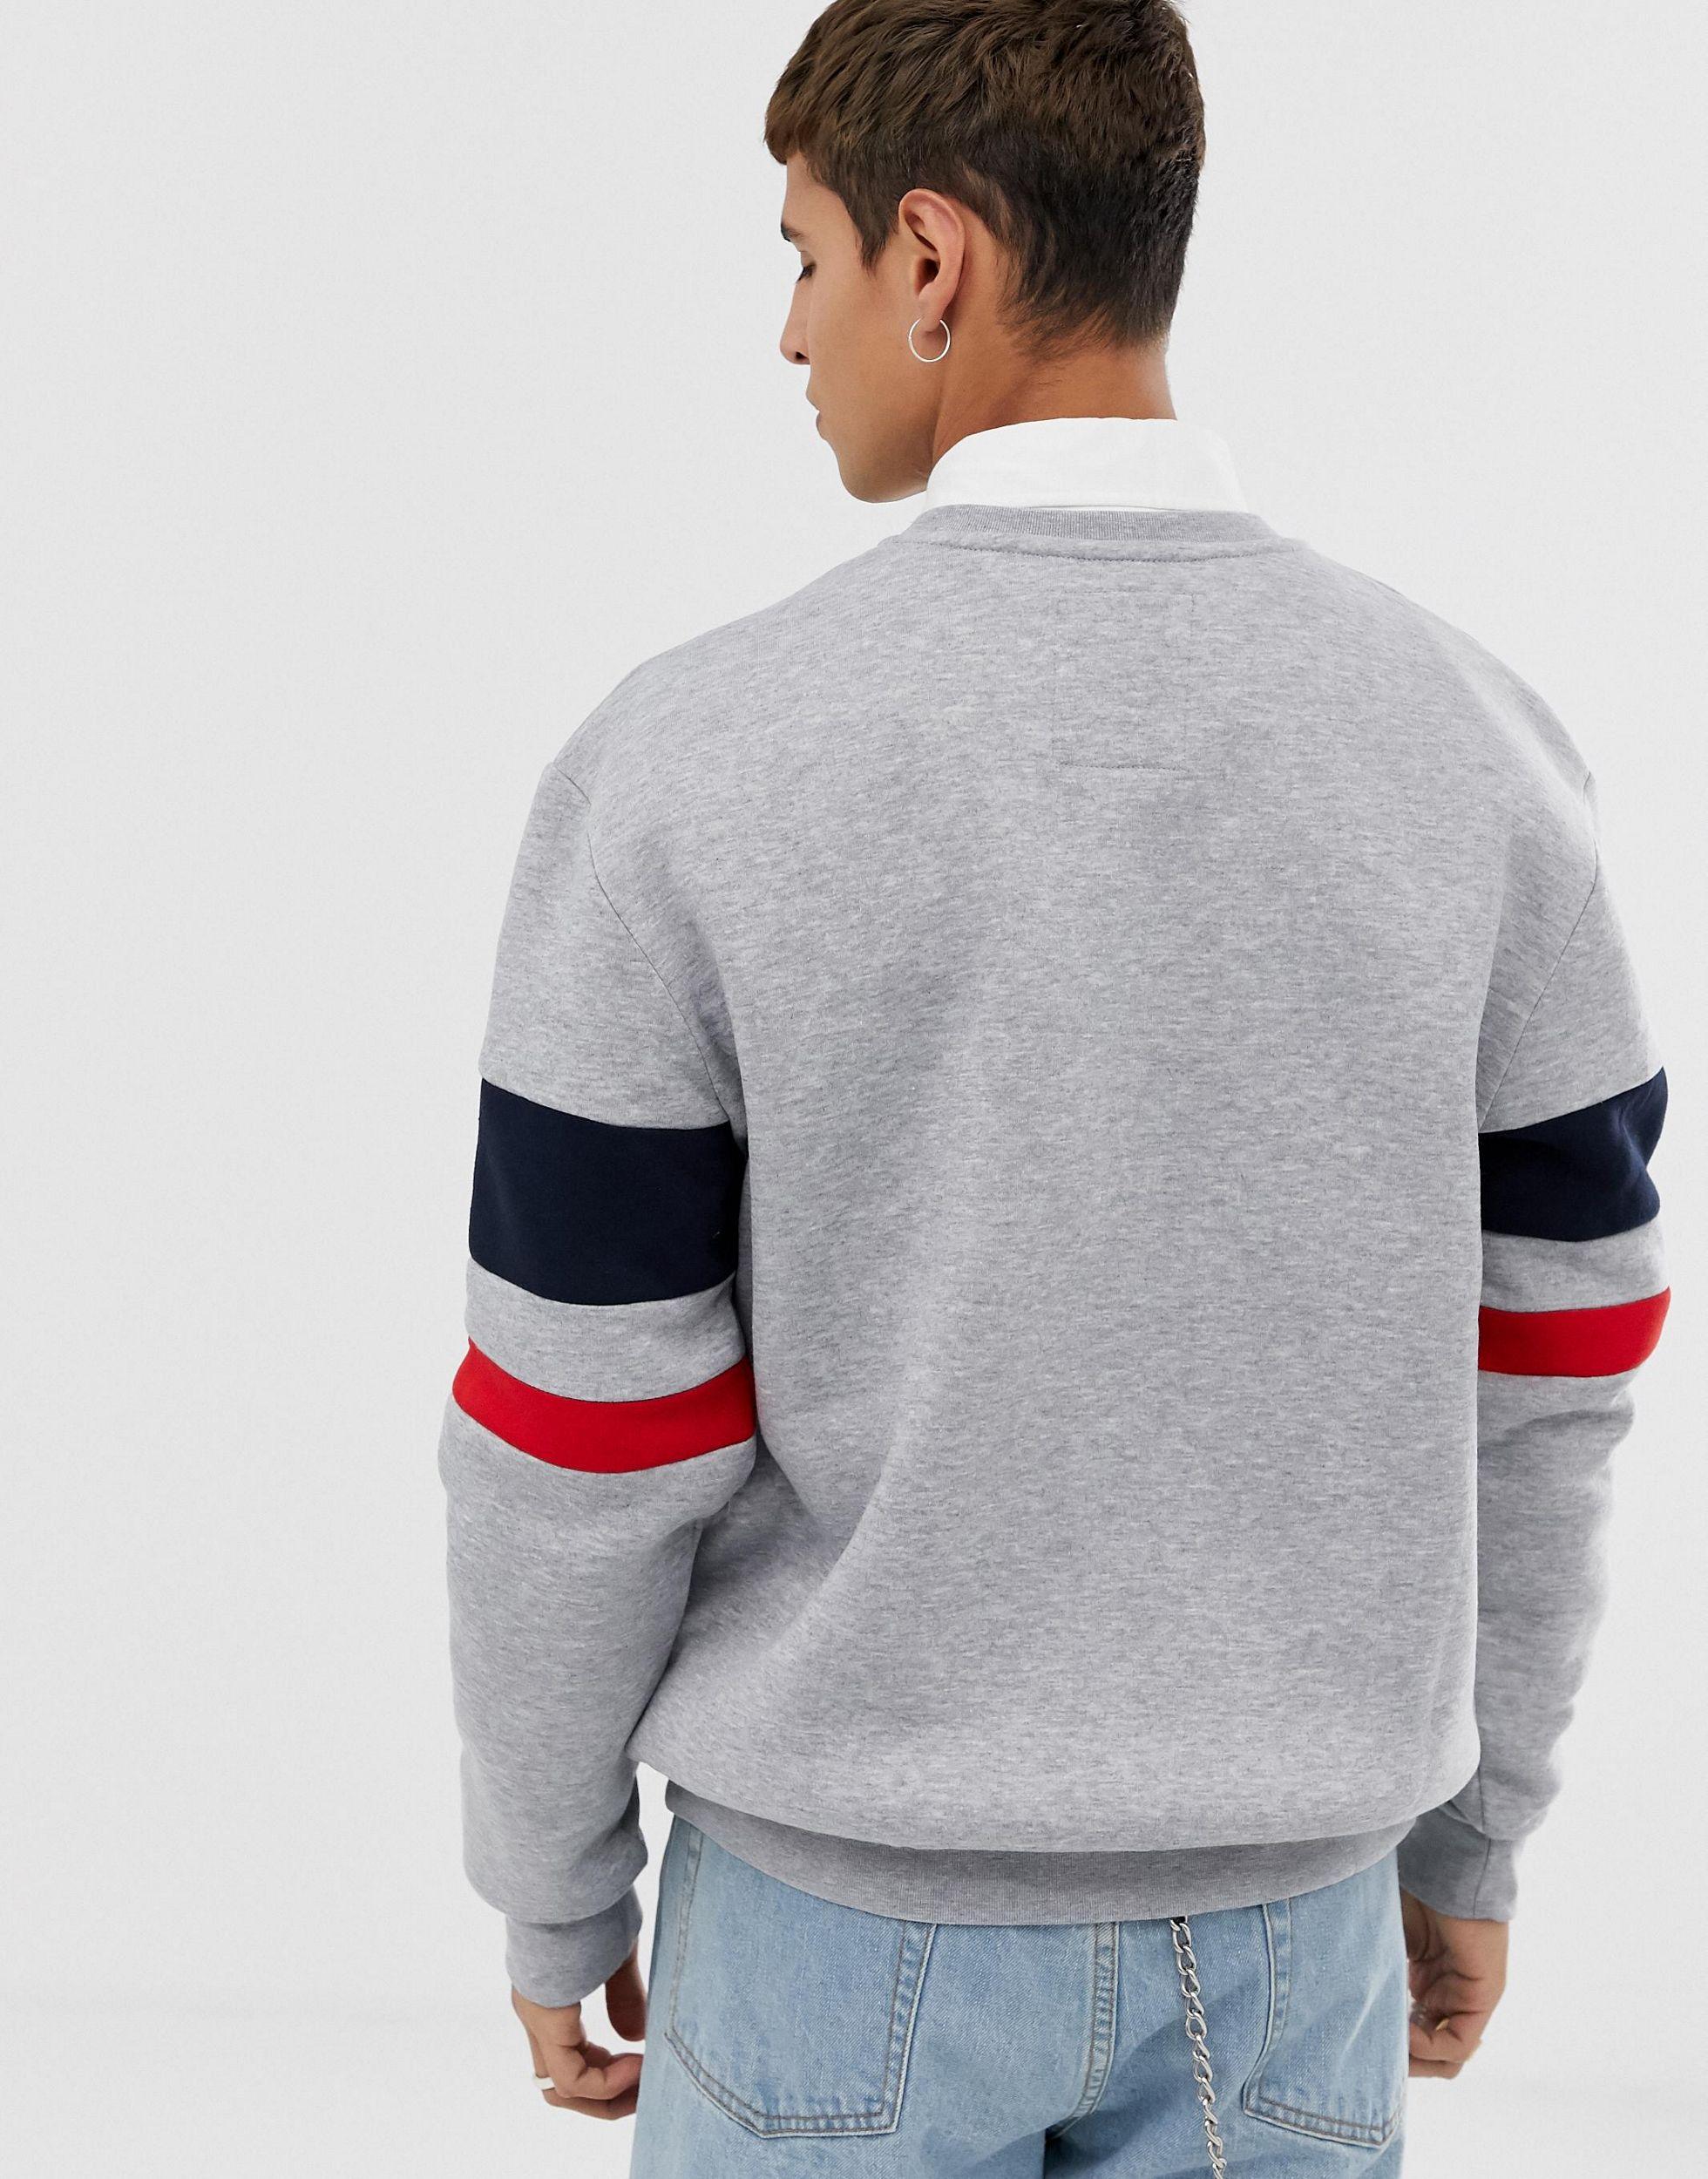 Pull&Bear Denim Mickey Mouse Sweatshirt in Gray for Men - Lyst